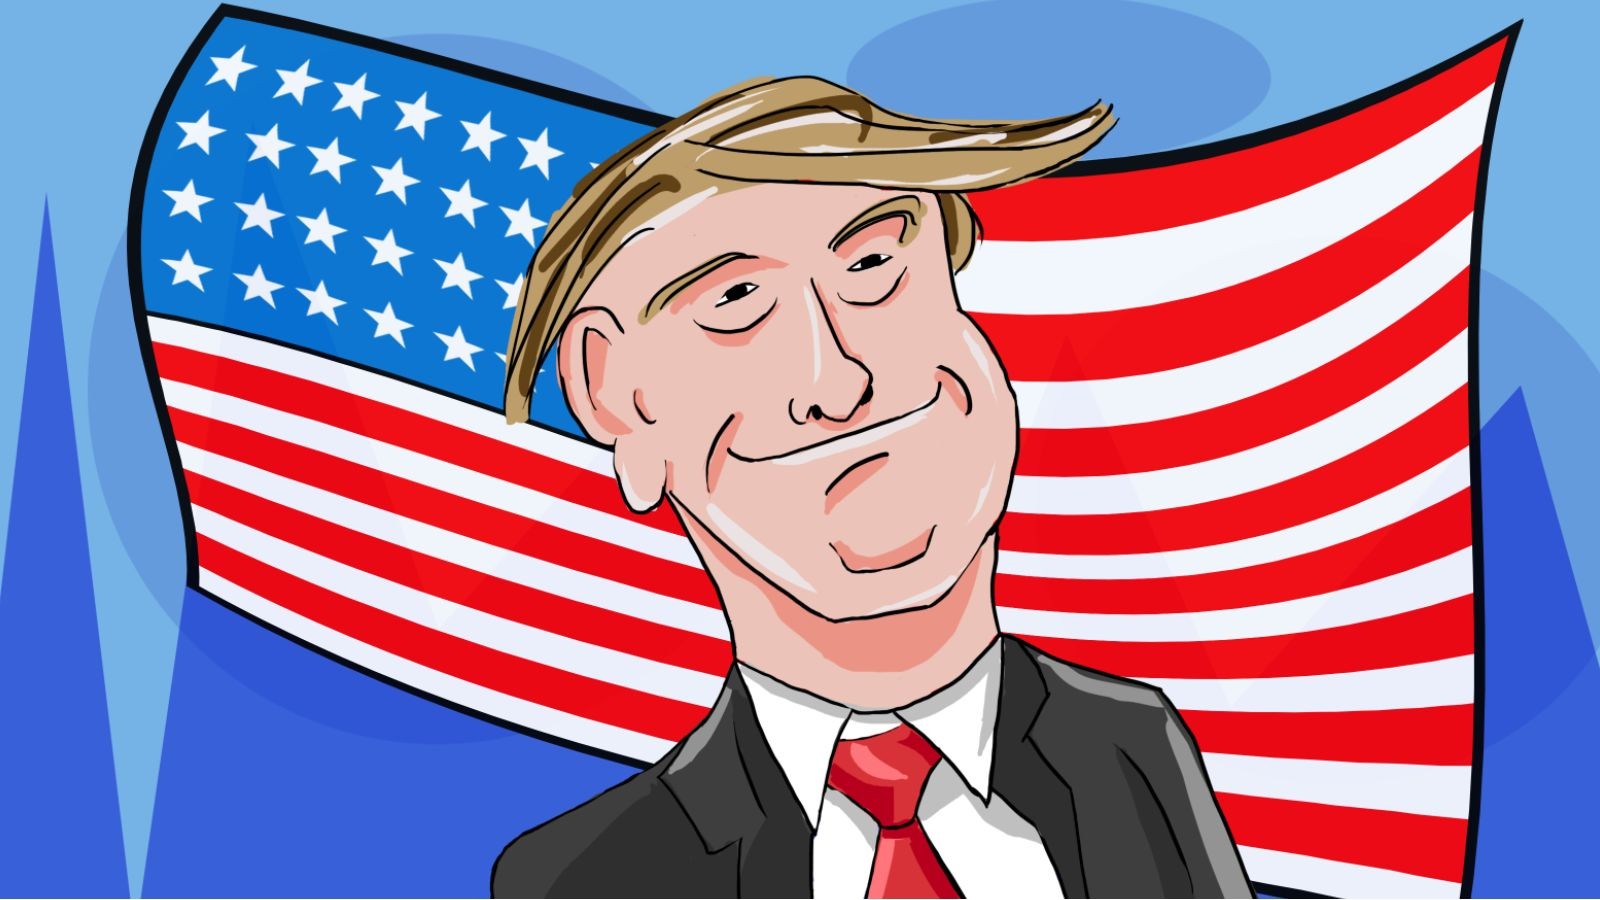 General 1600x900 Donald Trump cartoon caricature presidents American flag suits MAGA political figure digital art